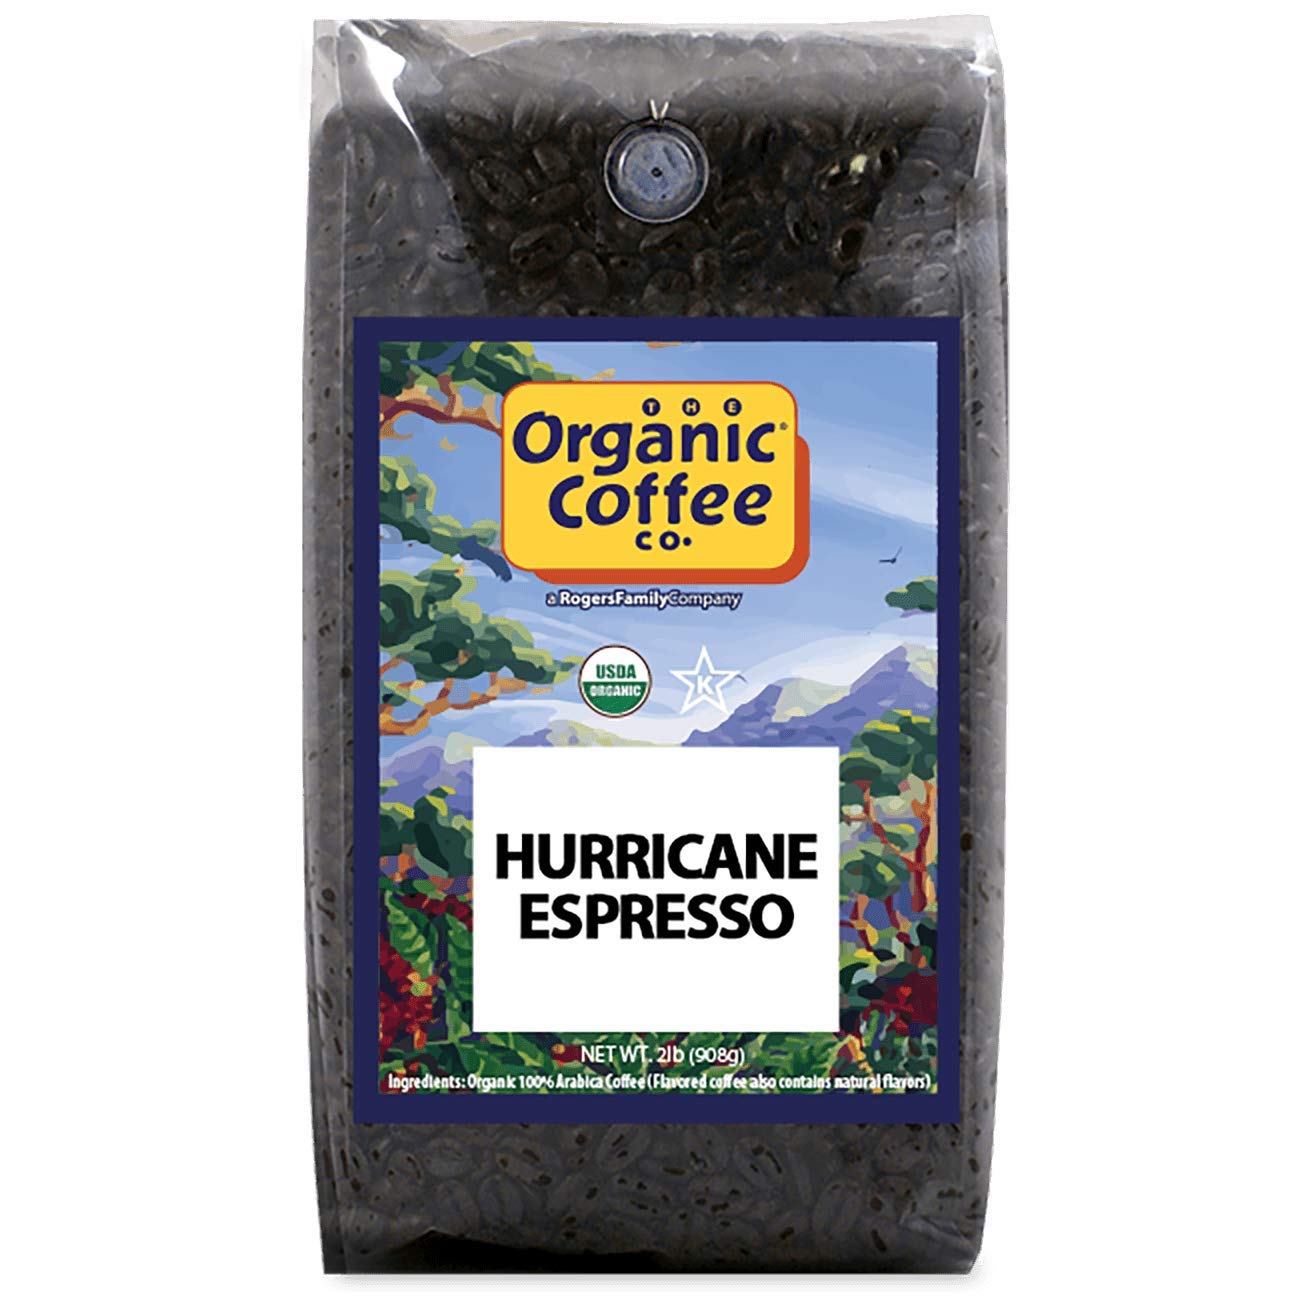 The Organic Coffee Co. Whole Bean Coffee - Hurricane Espresso Roast